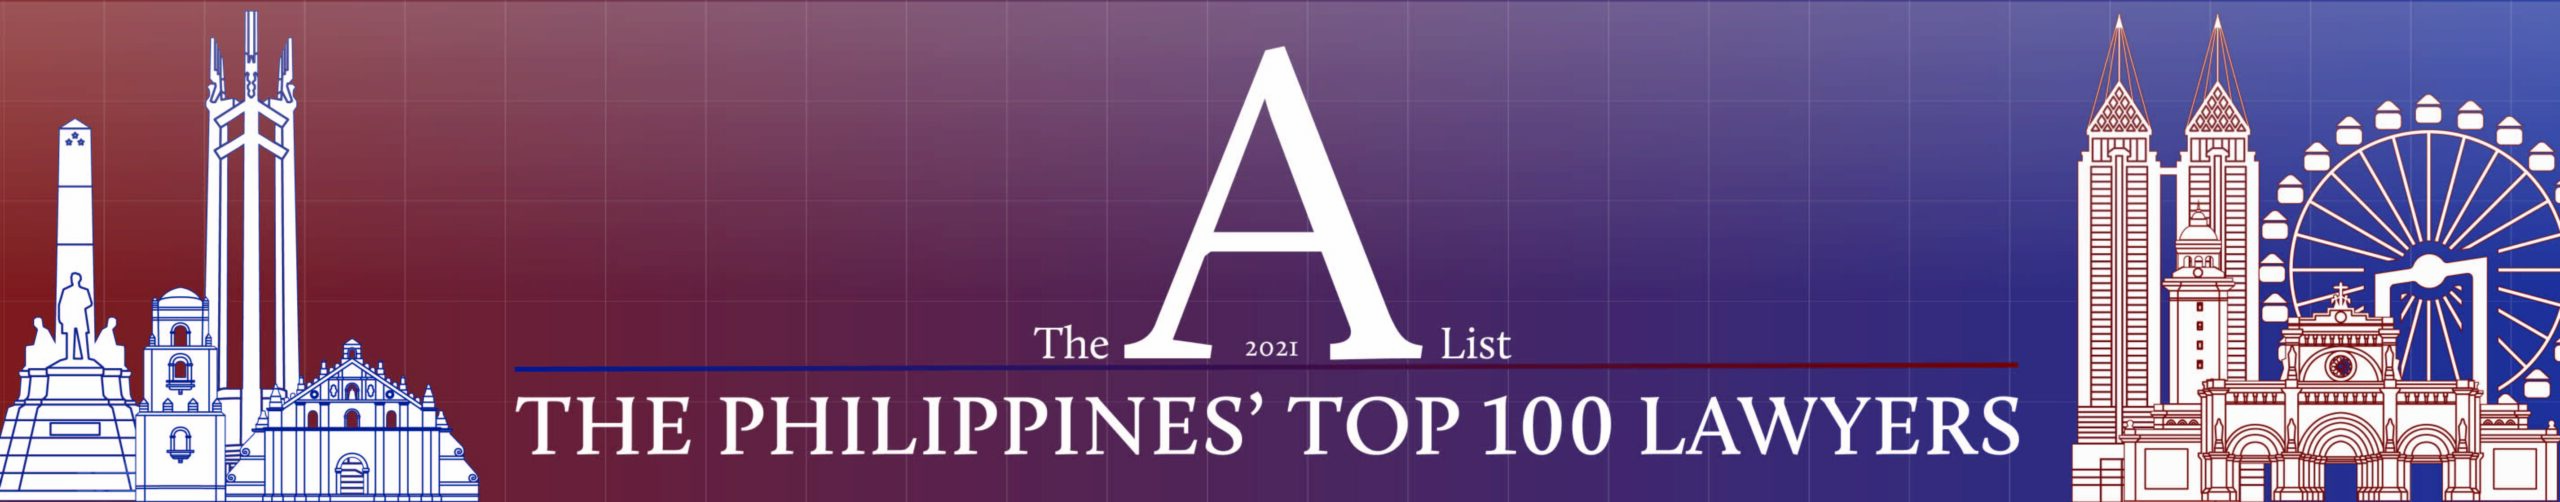 Philippines A-list 2021 banner-01